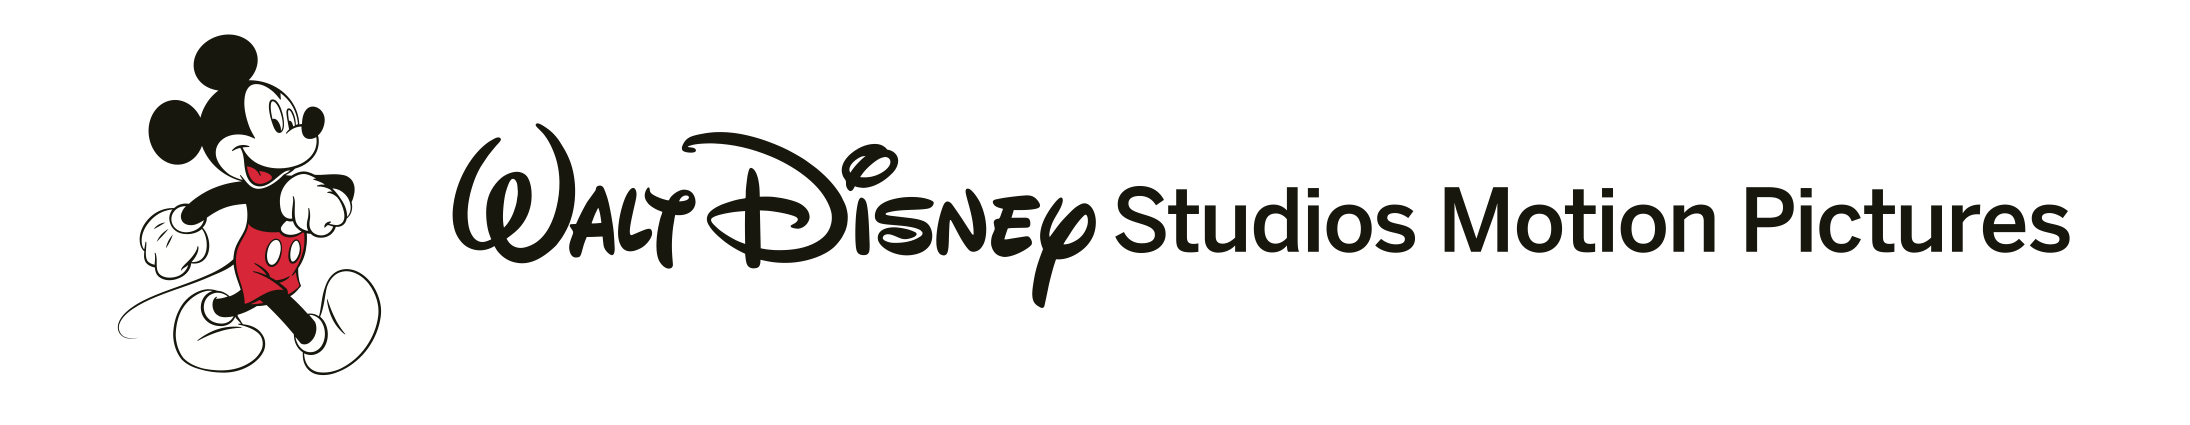 The Walt Disney Studios Logo - The Walt Disney Studios Movies Logo - On the Go in MCO